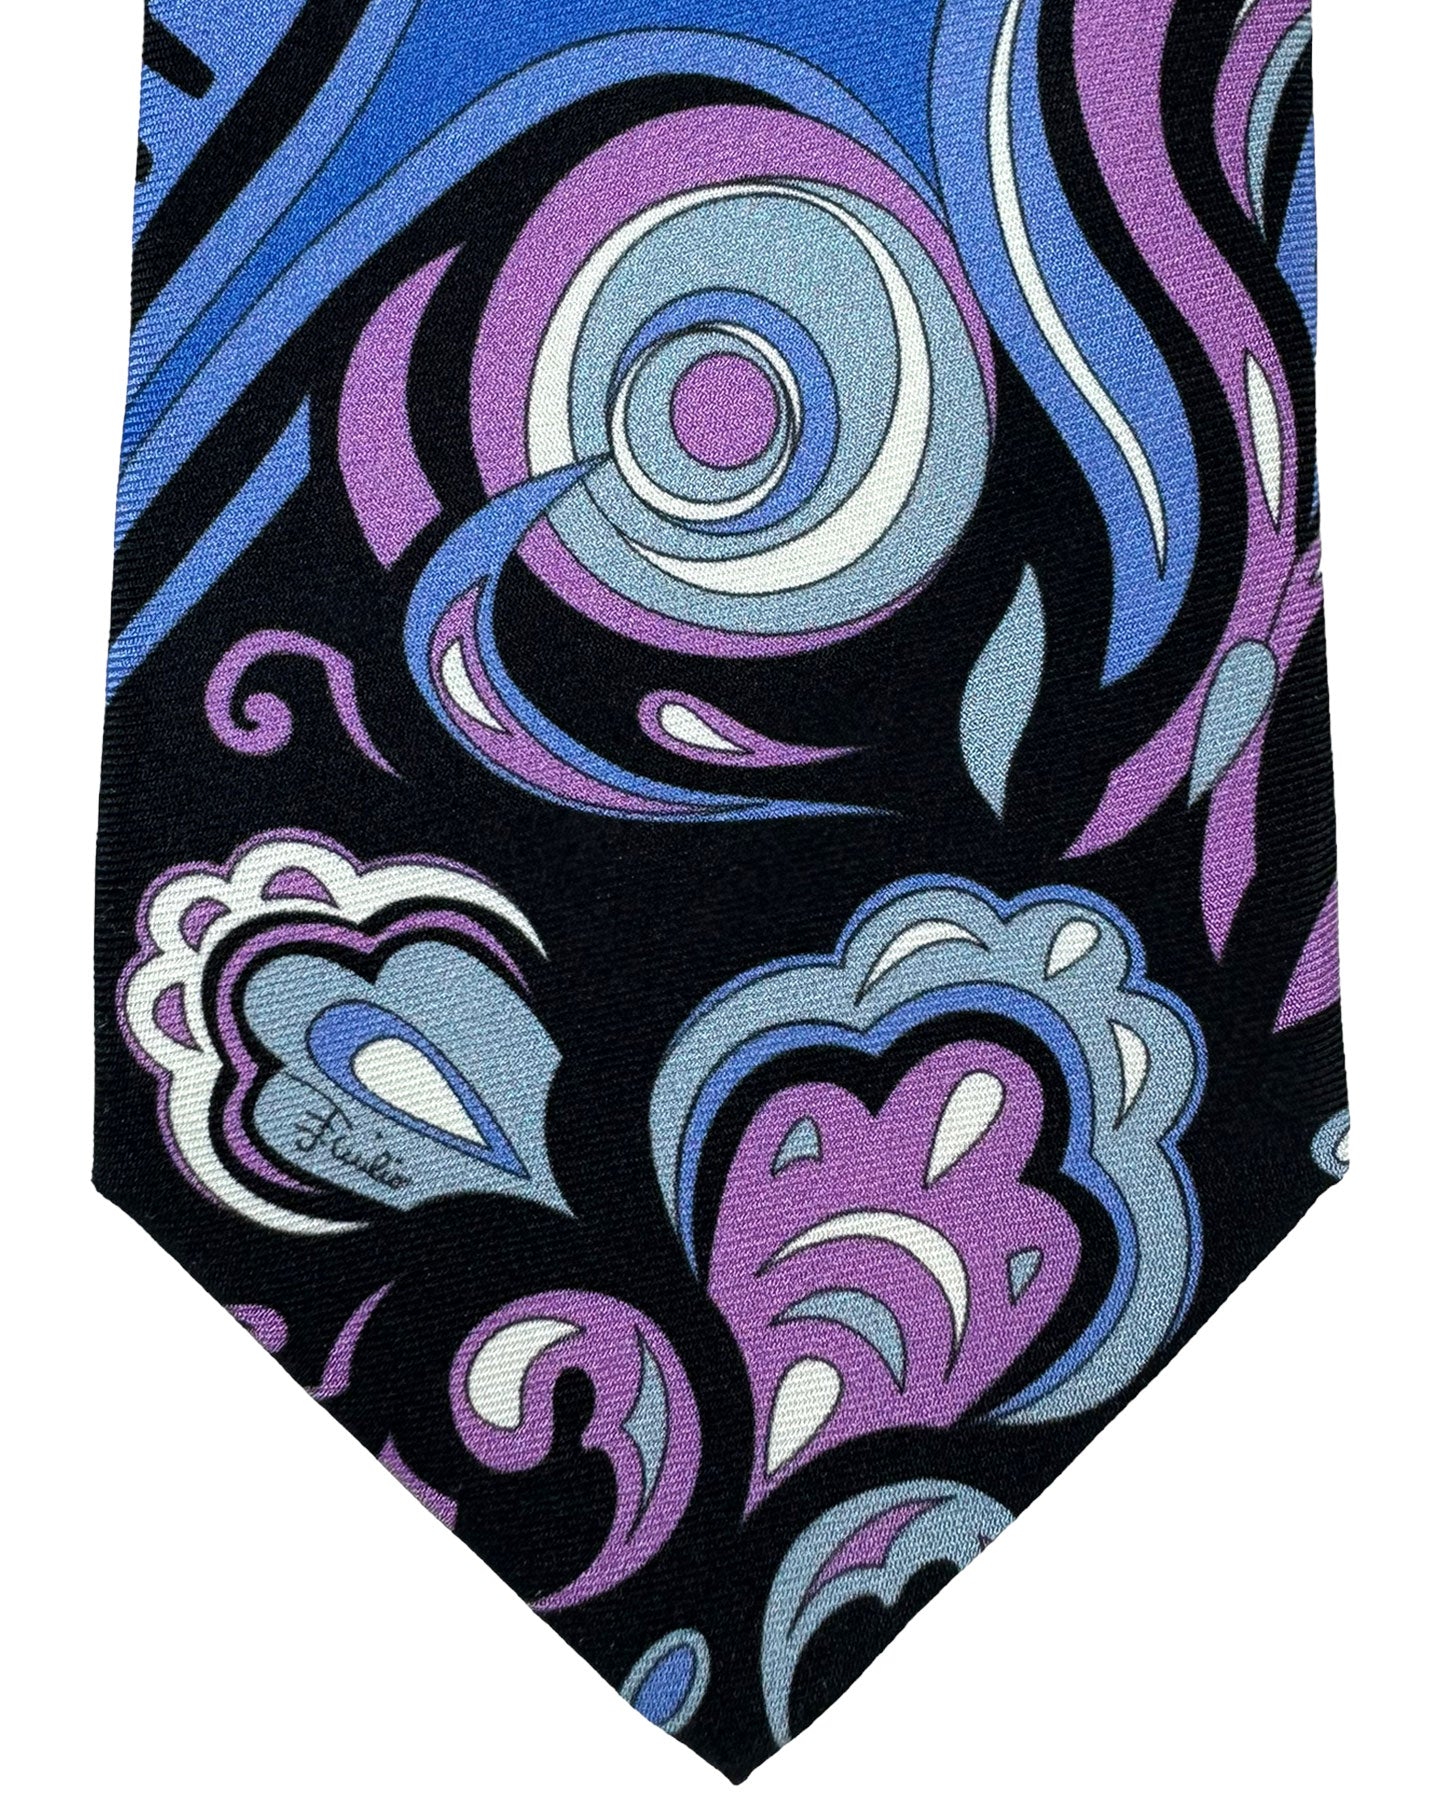 Emilio Pucci Silk Tie Signature Black Blue Purple Swirl Design